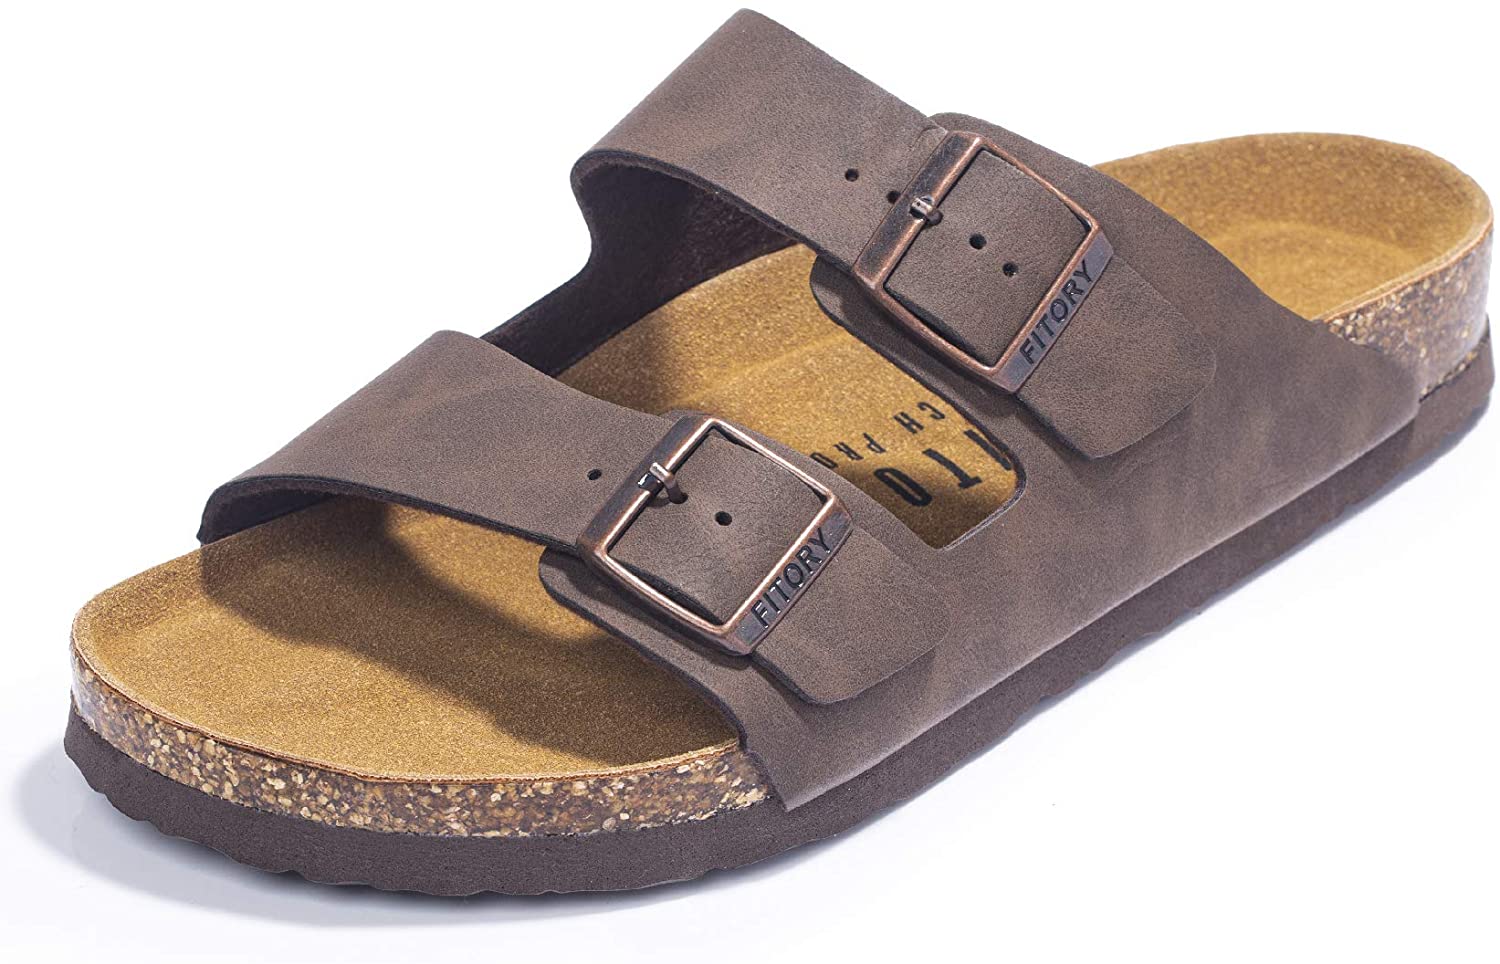 Shop Men's Sandals, Slides, Arch Support & more